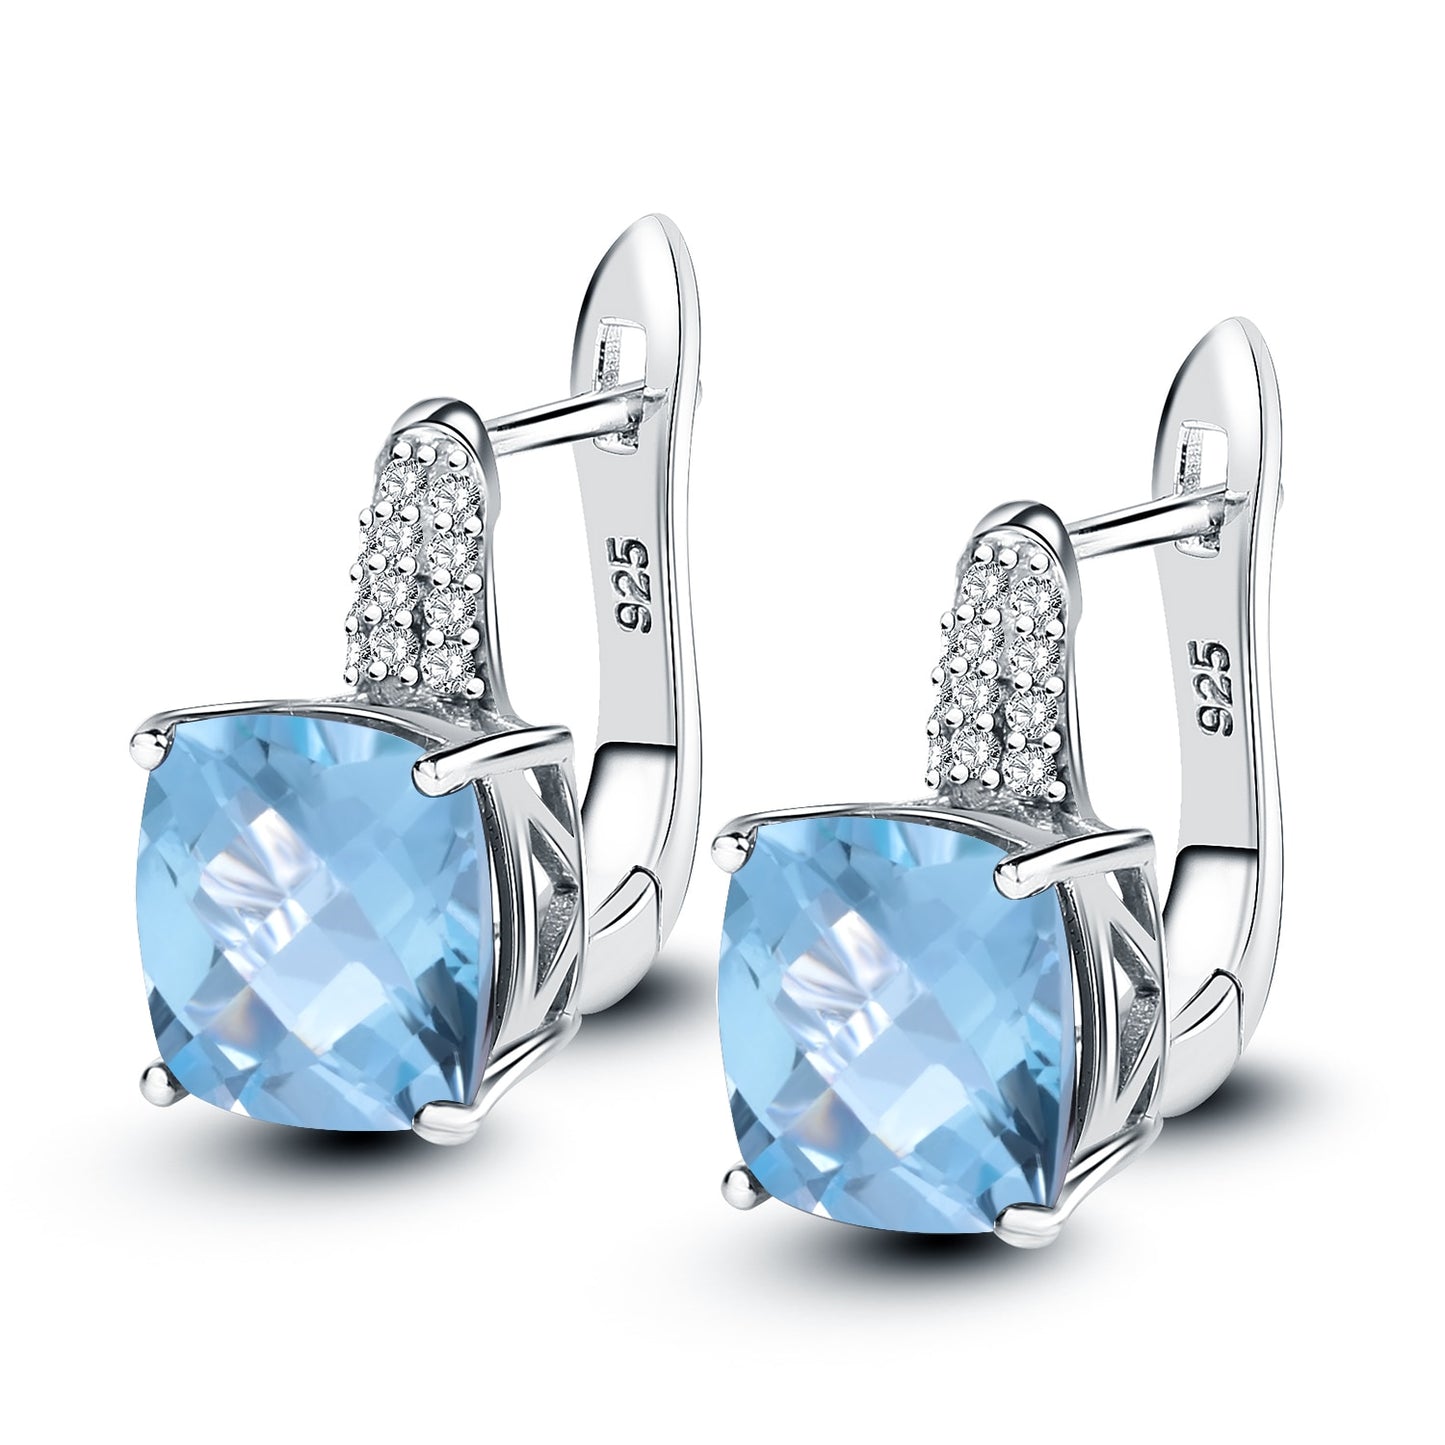 GEM'S BALLET 7.33Ct Natural Blueish Mystic Quartz 925 Sterling Silver Vintge Gemstone Stud Earrings for Women Fine Jewelry Sky Blue Topaz China